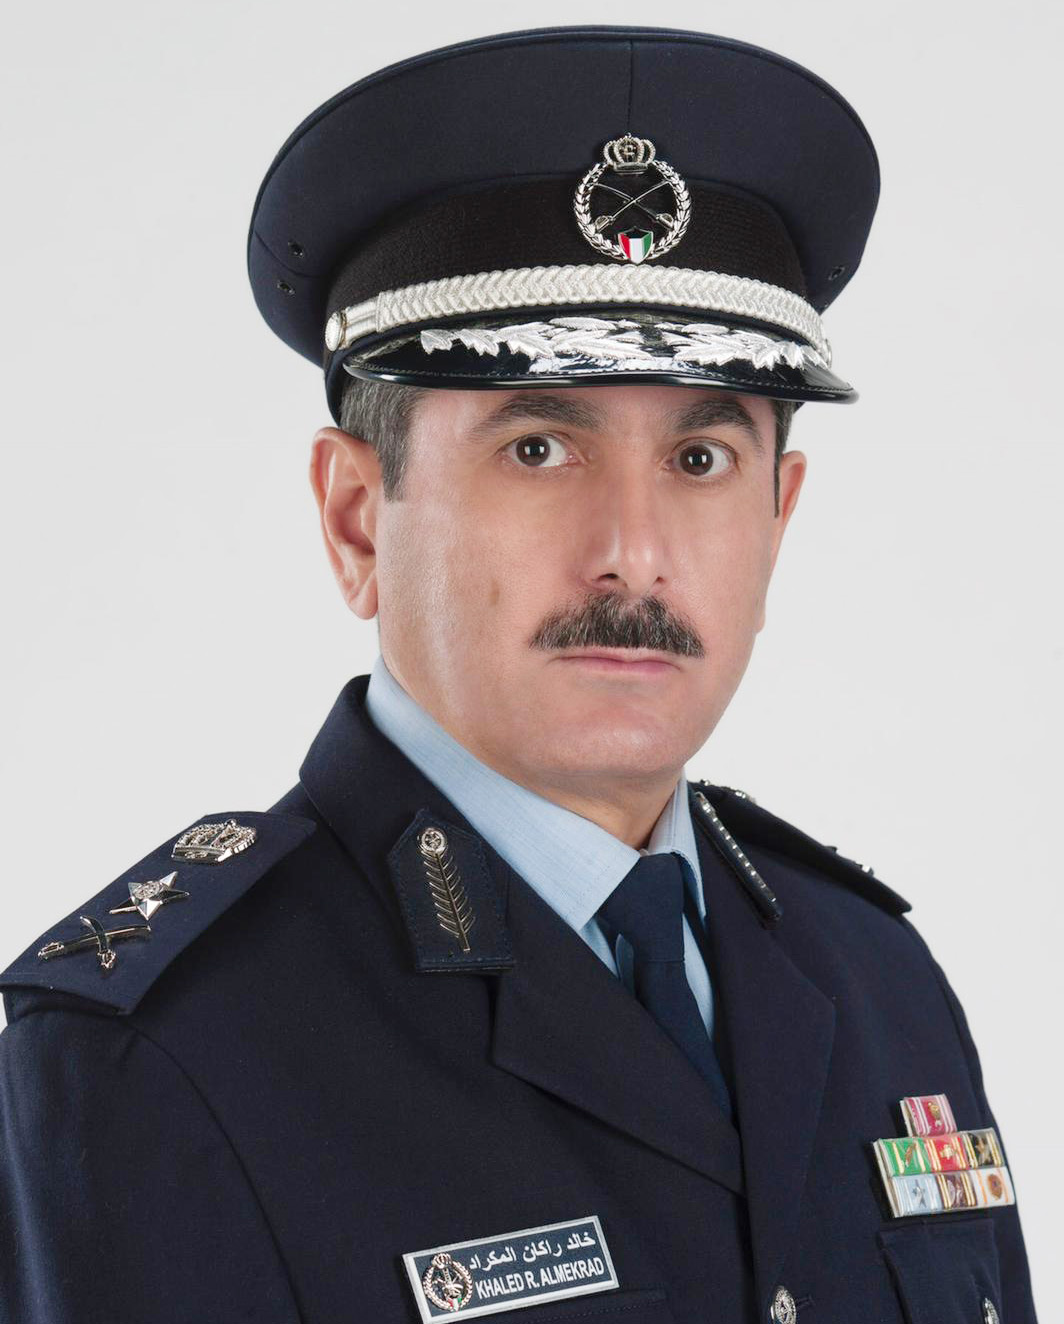 Director General of Kuwait's Fire Service Directorate (KFSD) Lieutenant General Khaled Al-Mekrad